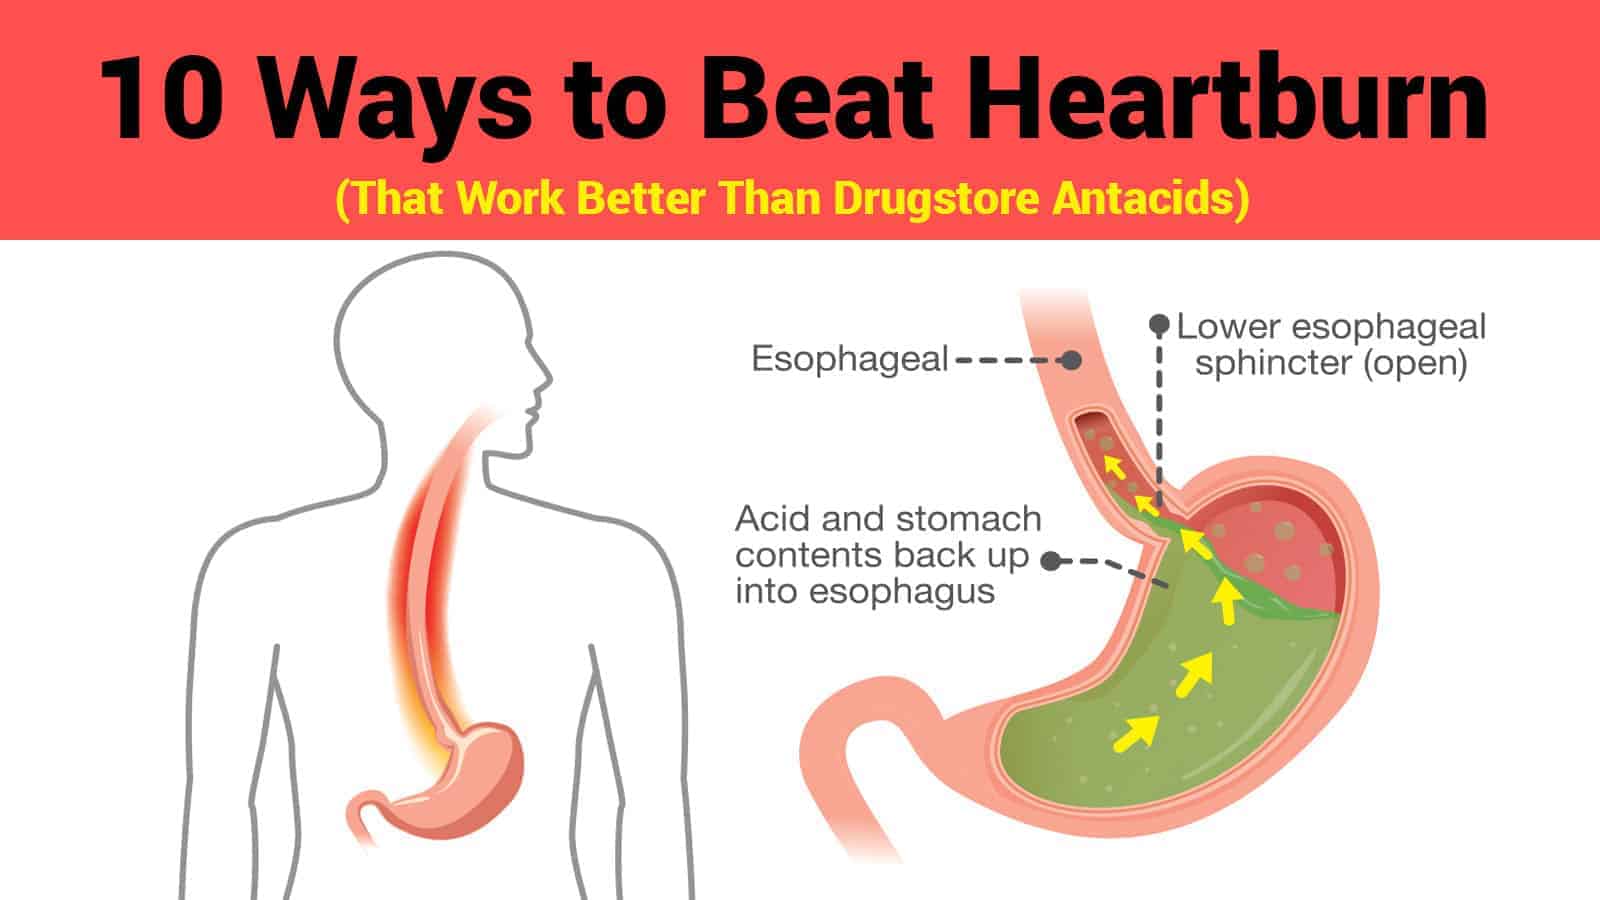 10 Ways to Beat Heartburn (That Work Better Than Drugstore Antacids)